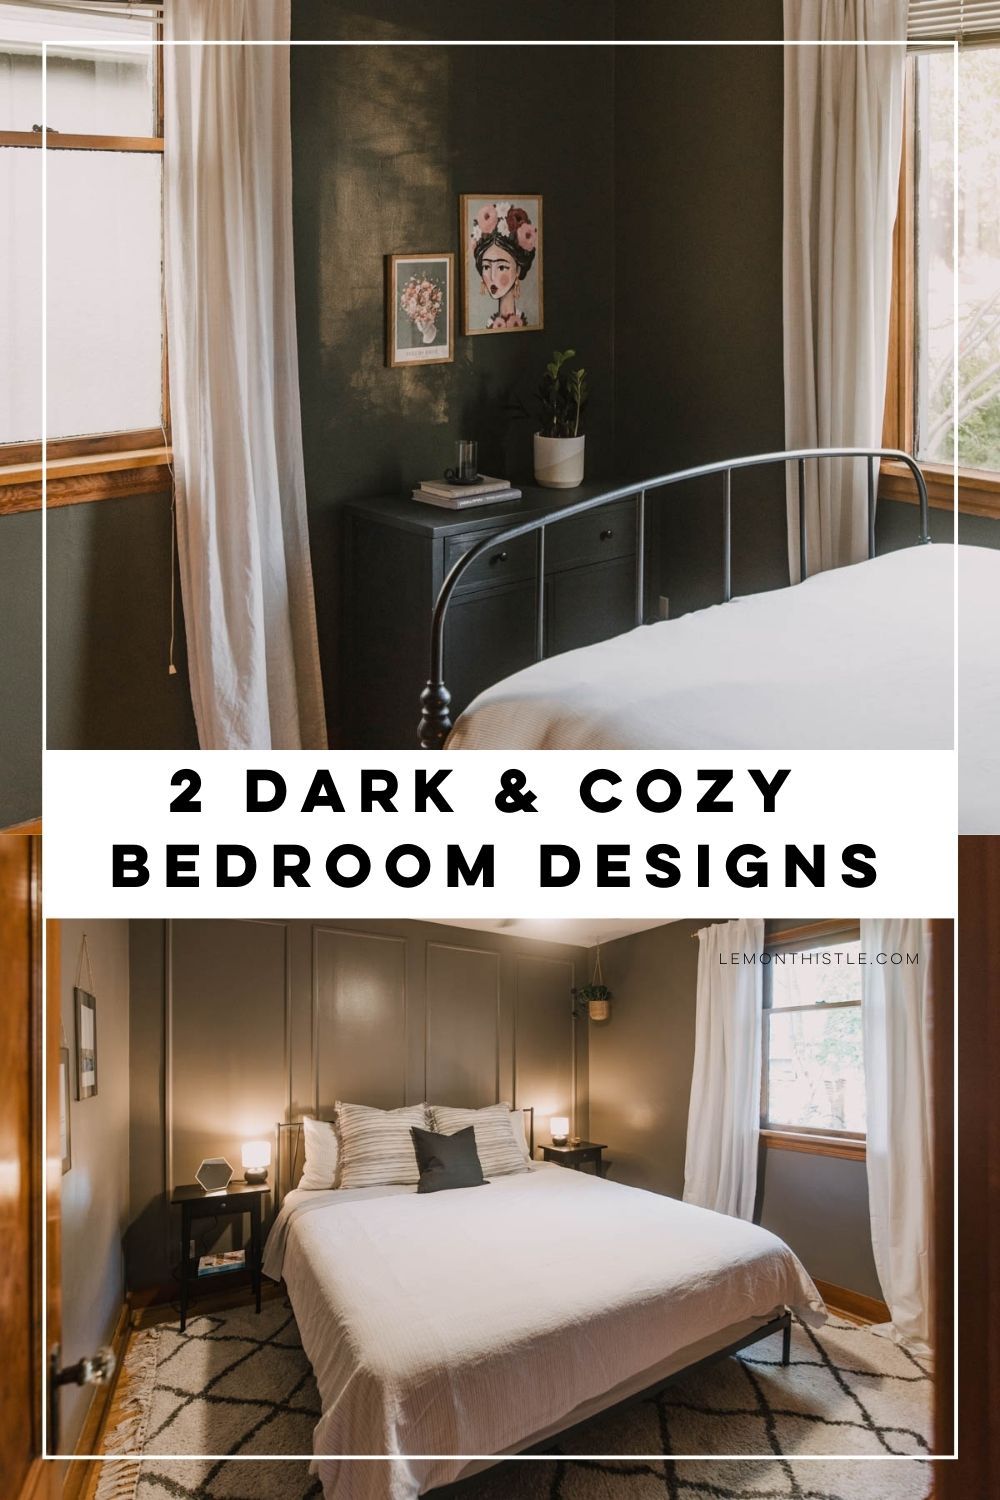 Two Dark and Cozy bedroom designs